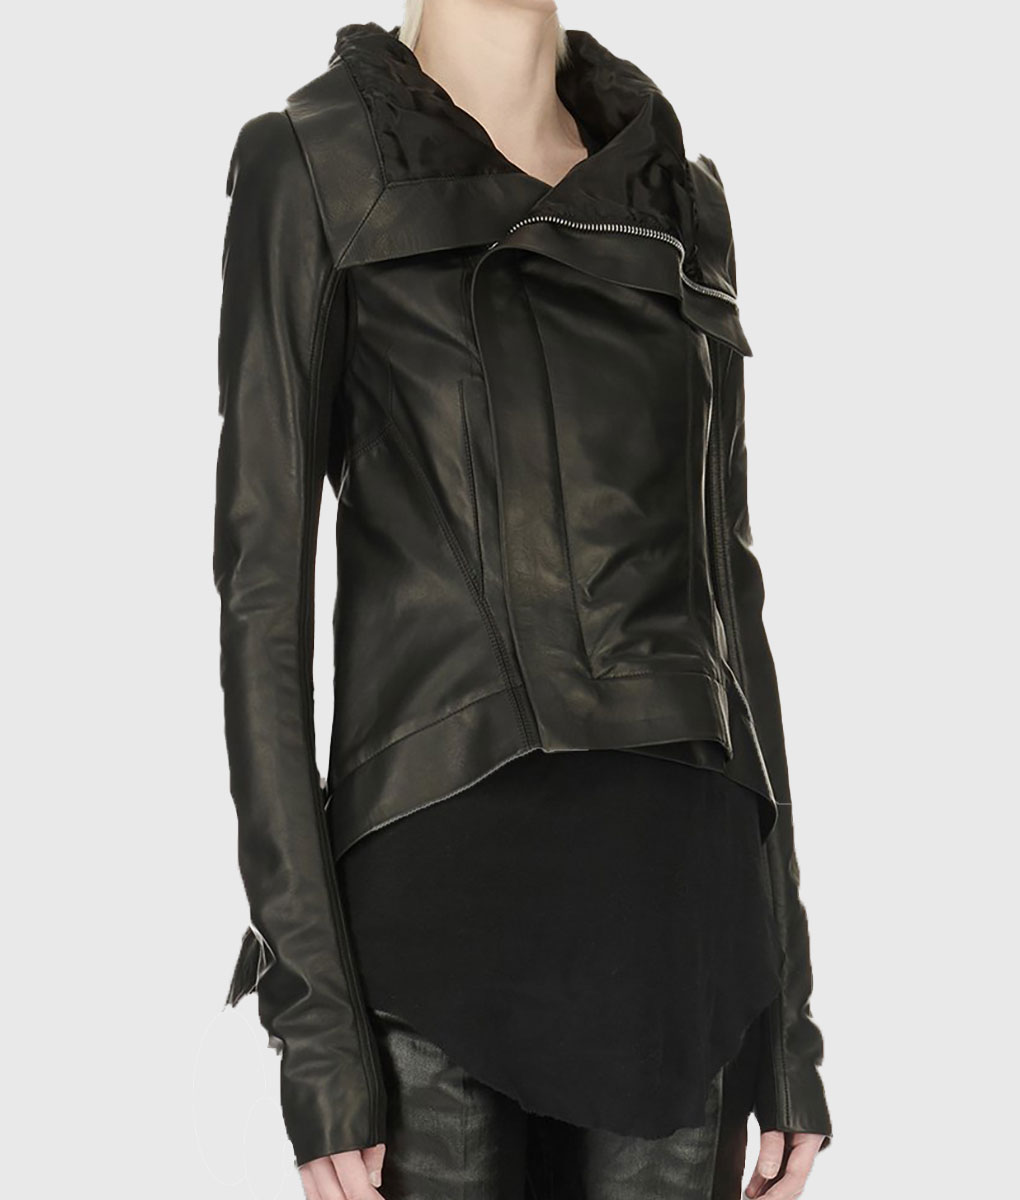 Taylor Swift Owens Black Leather Jacket (4)